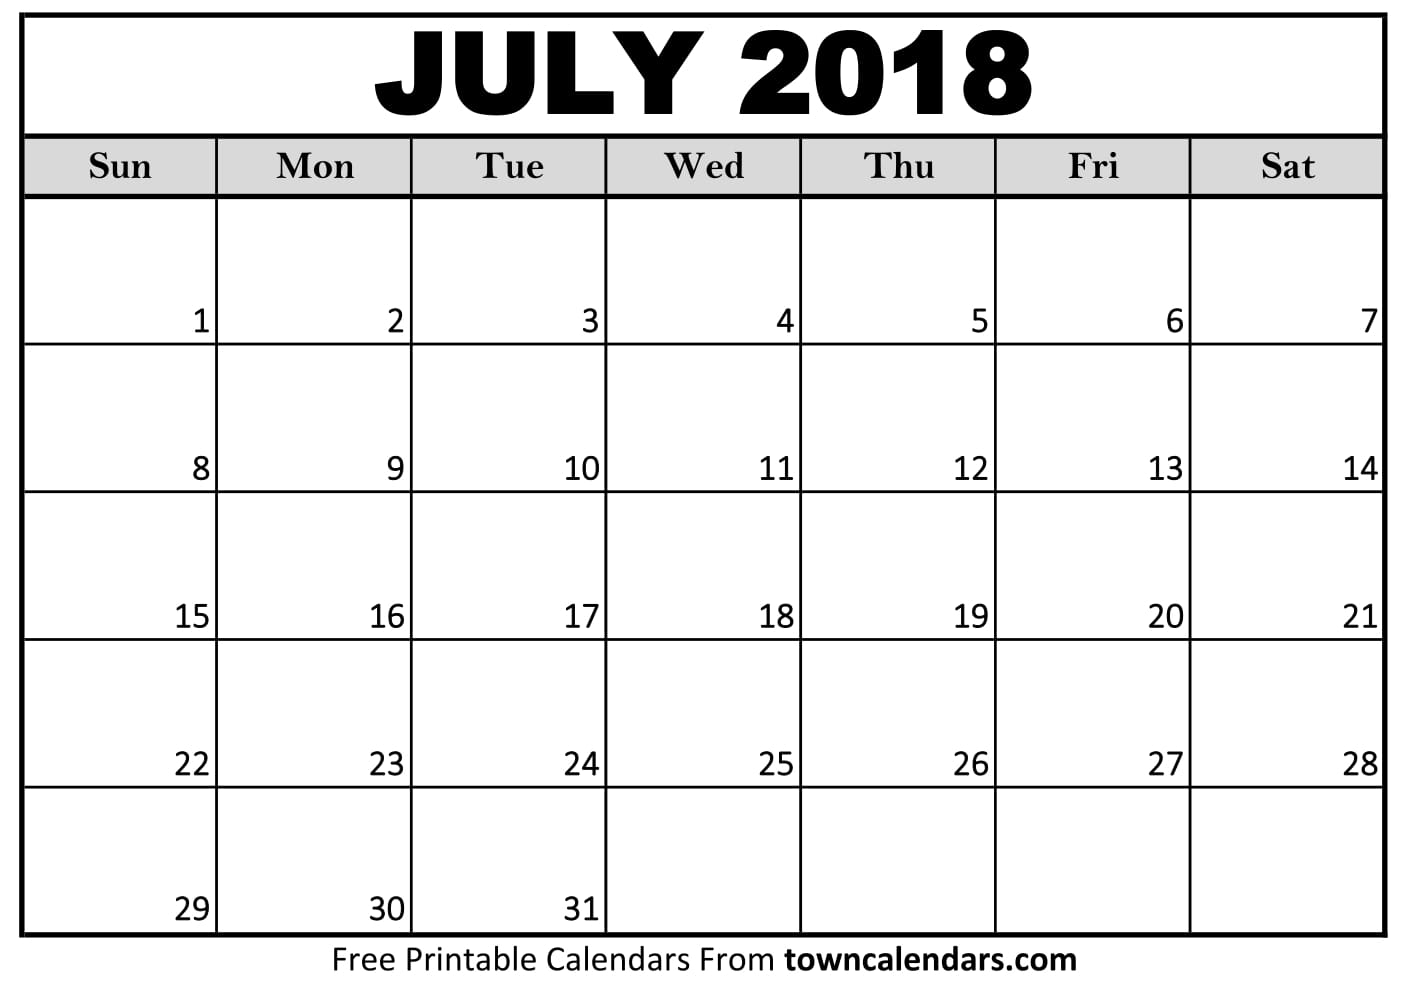 Printable July 2018 Calendar - towncalendars.com